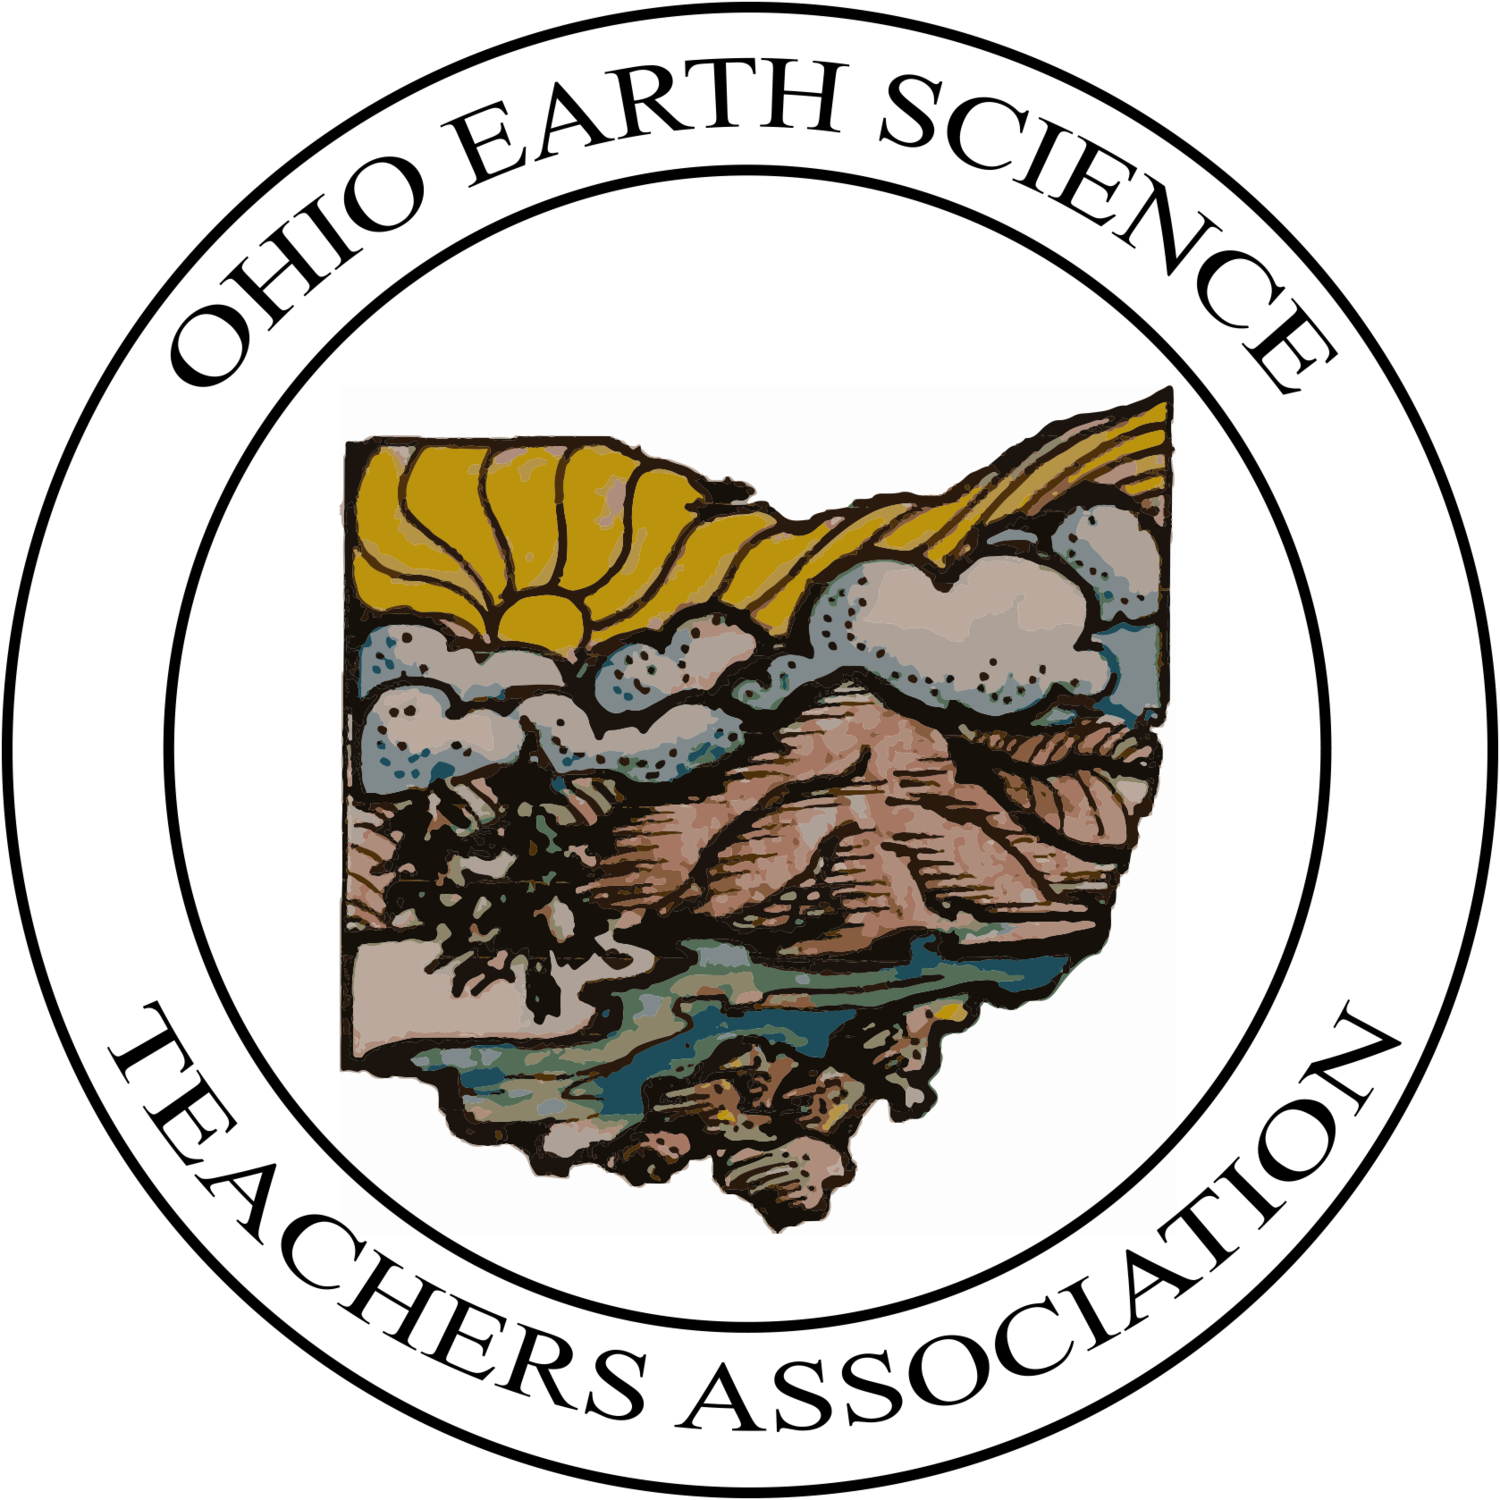 Ohio teachers association . Clipart rock earth science